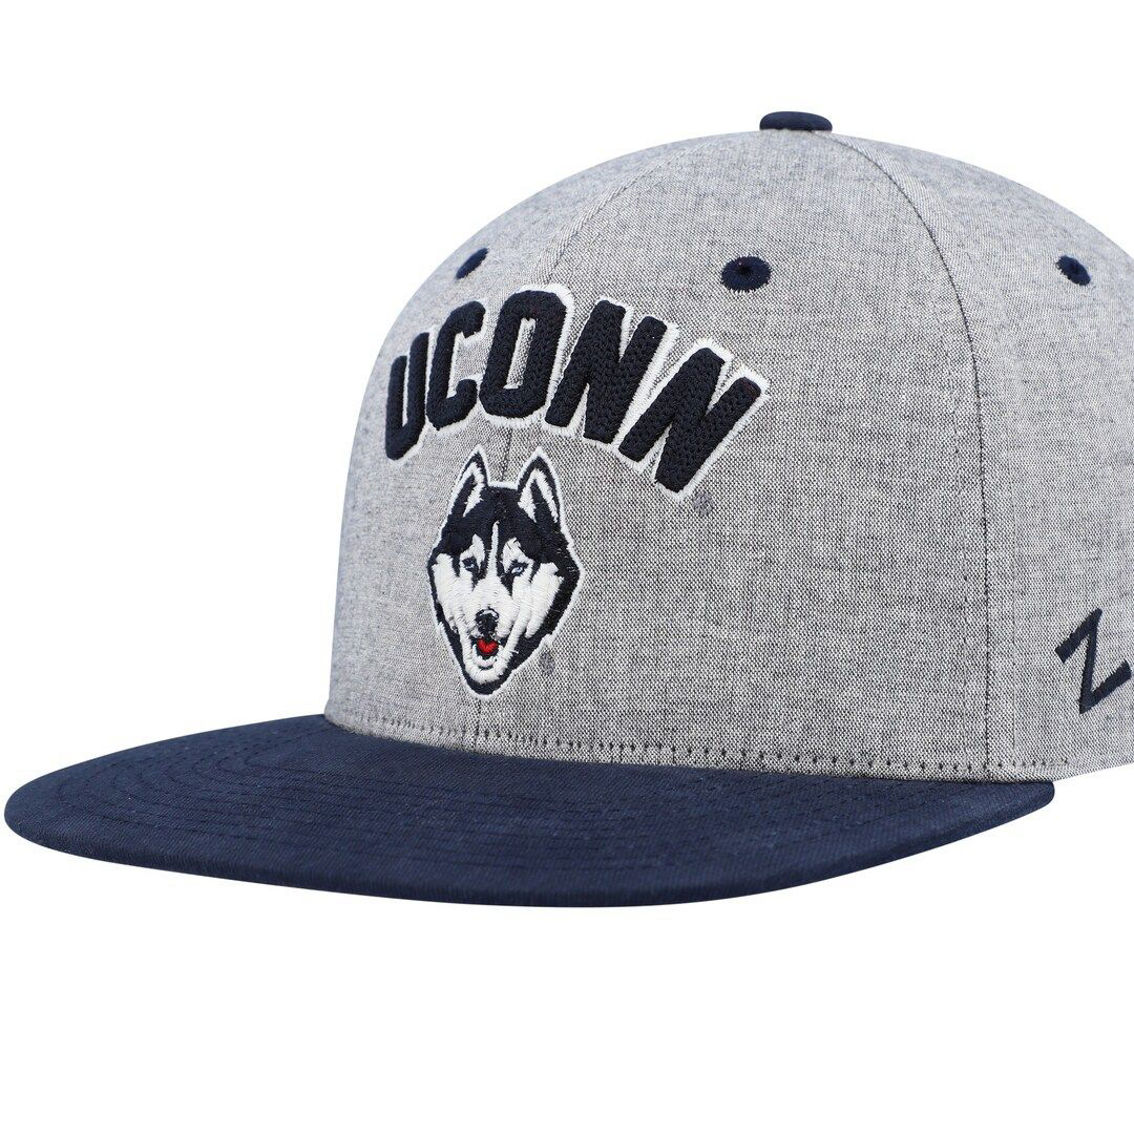 Zephyr Men's Gray/Navy UConn Huskies High Cut Snapback Hat - Image 2 of 4